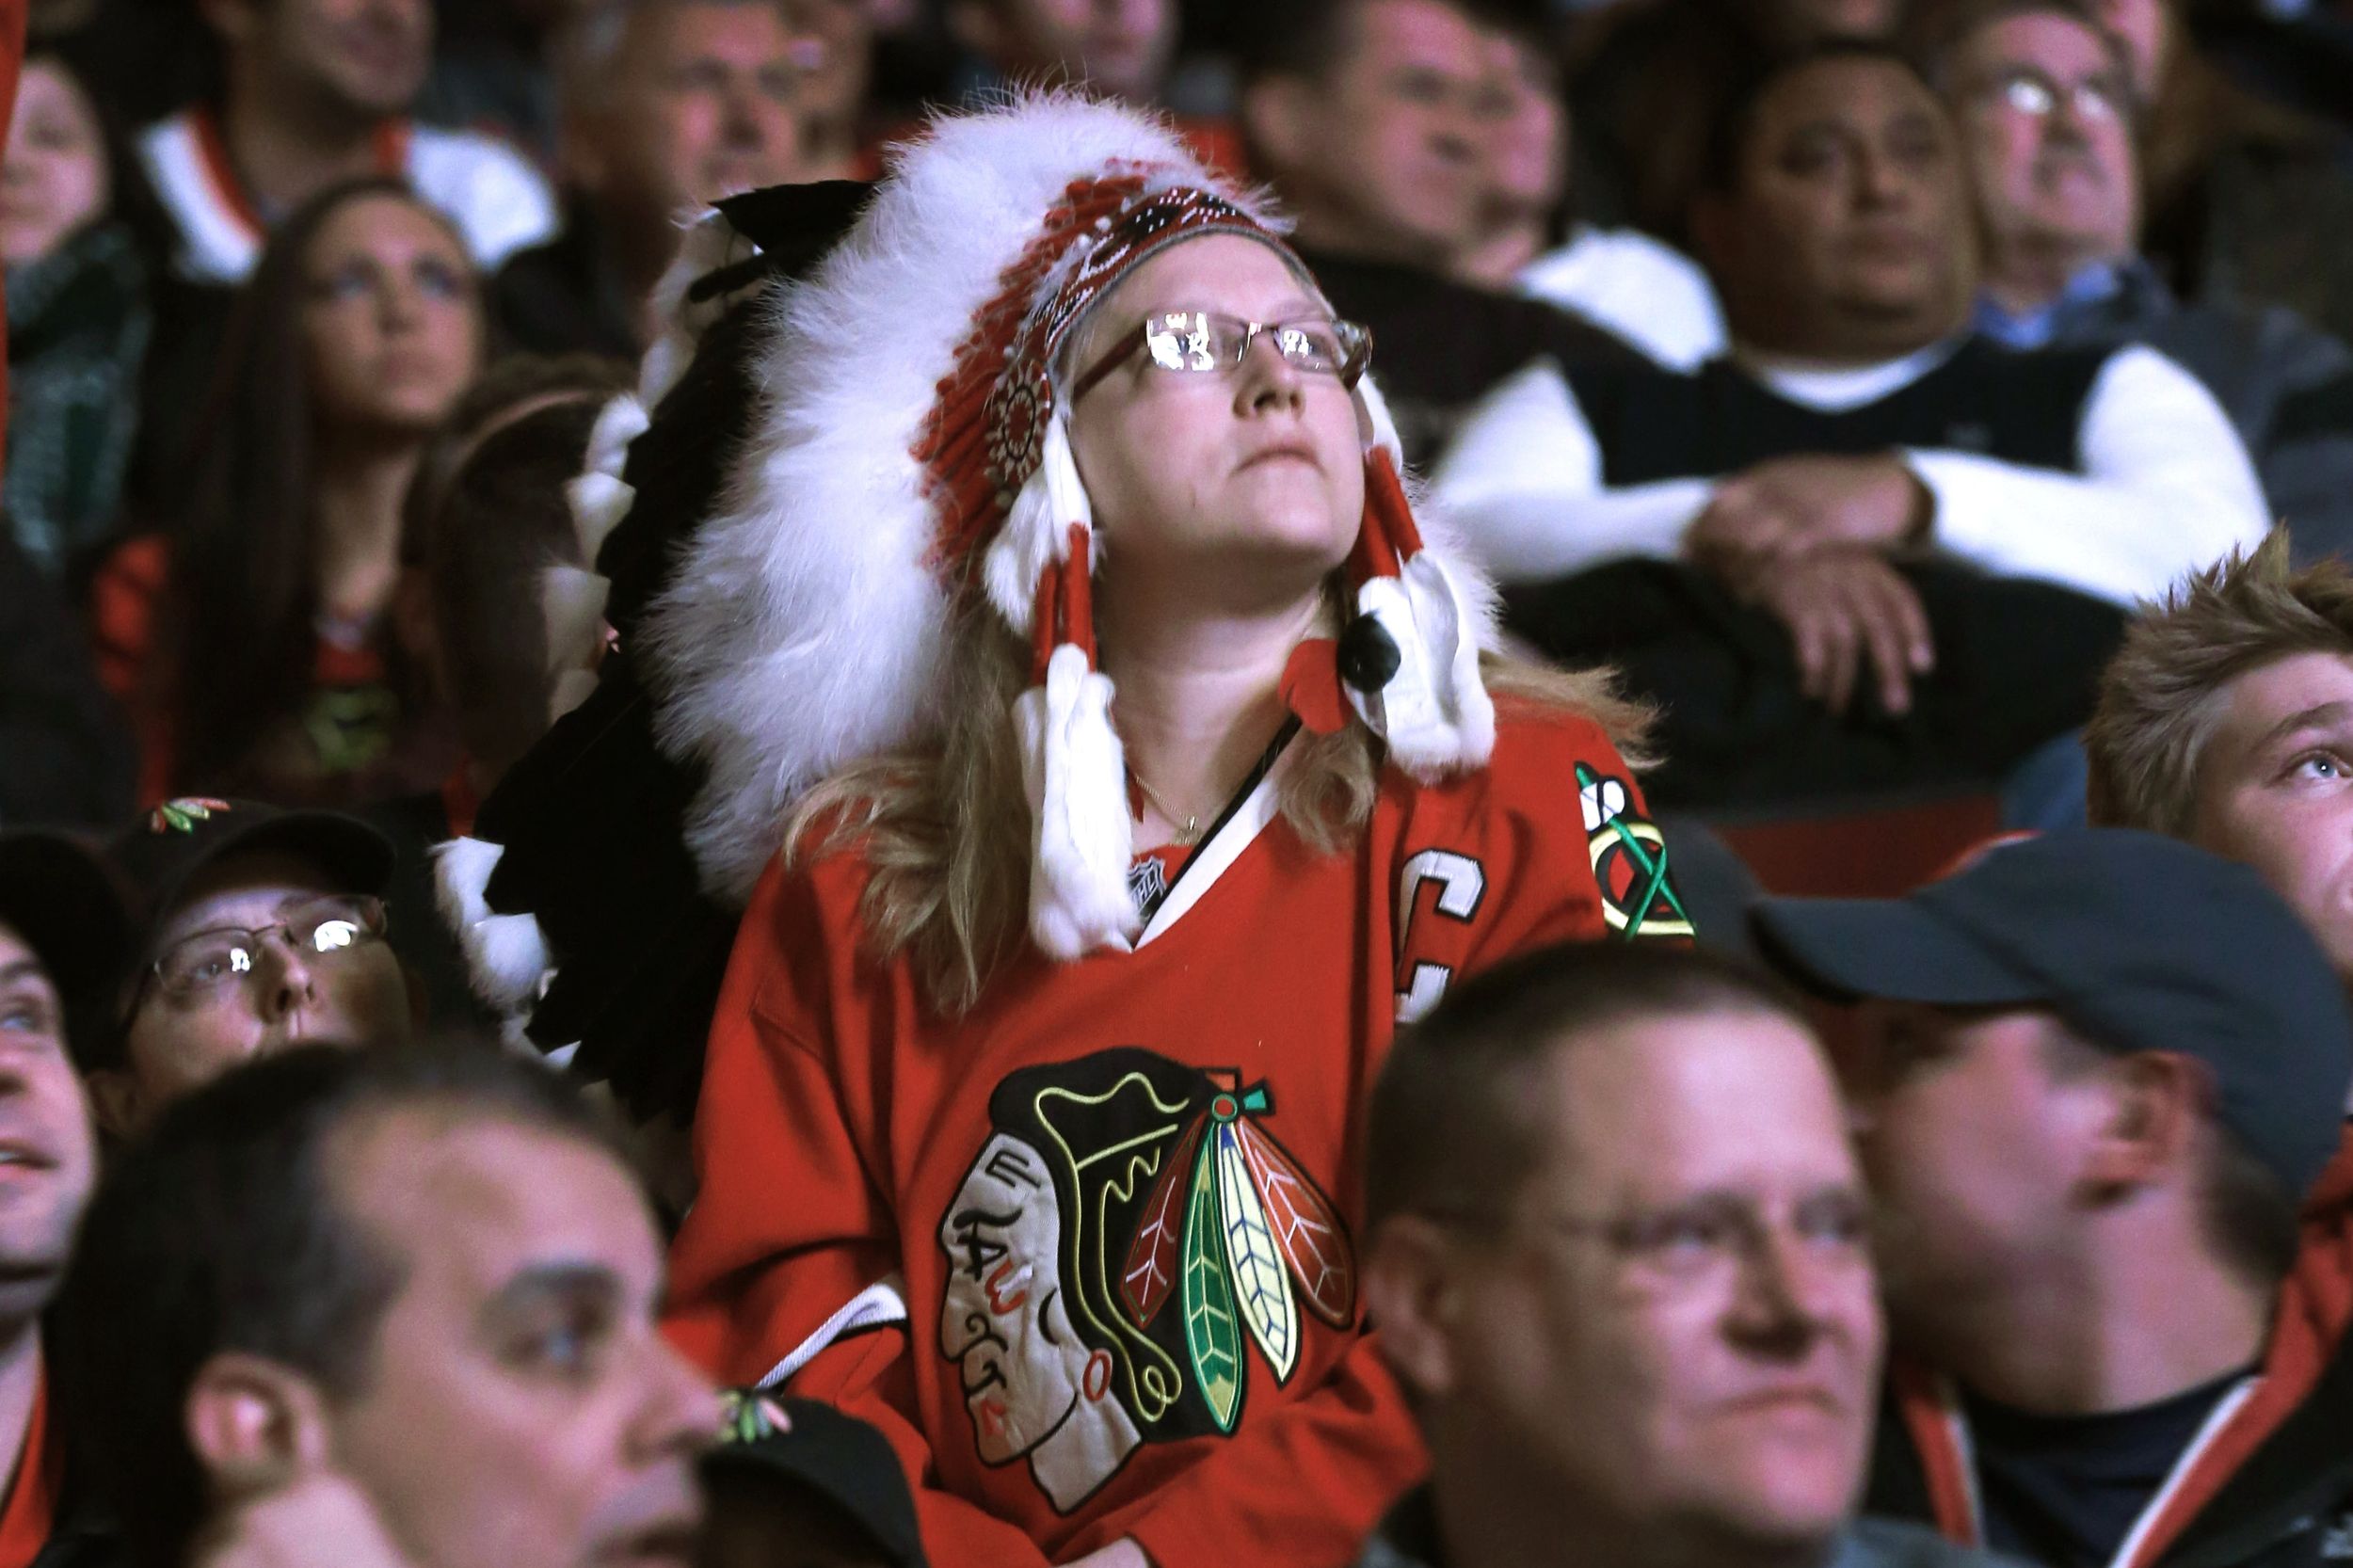 Blackhawks Ban Native American Headdresses At Home Games The Spokesman Review